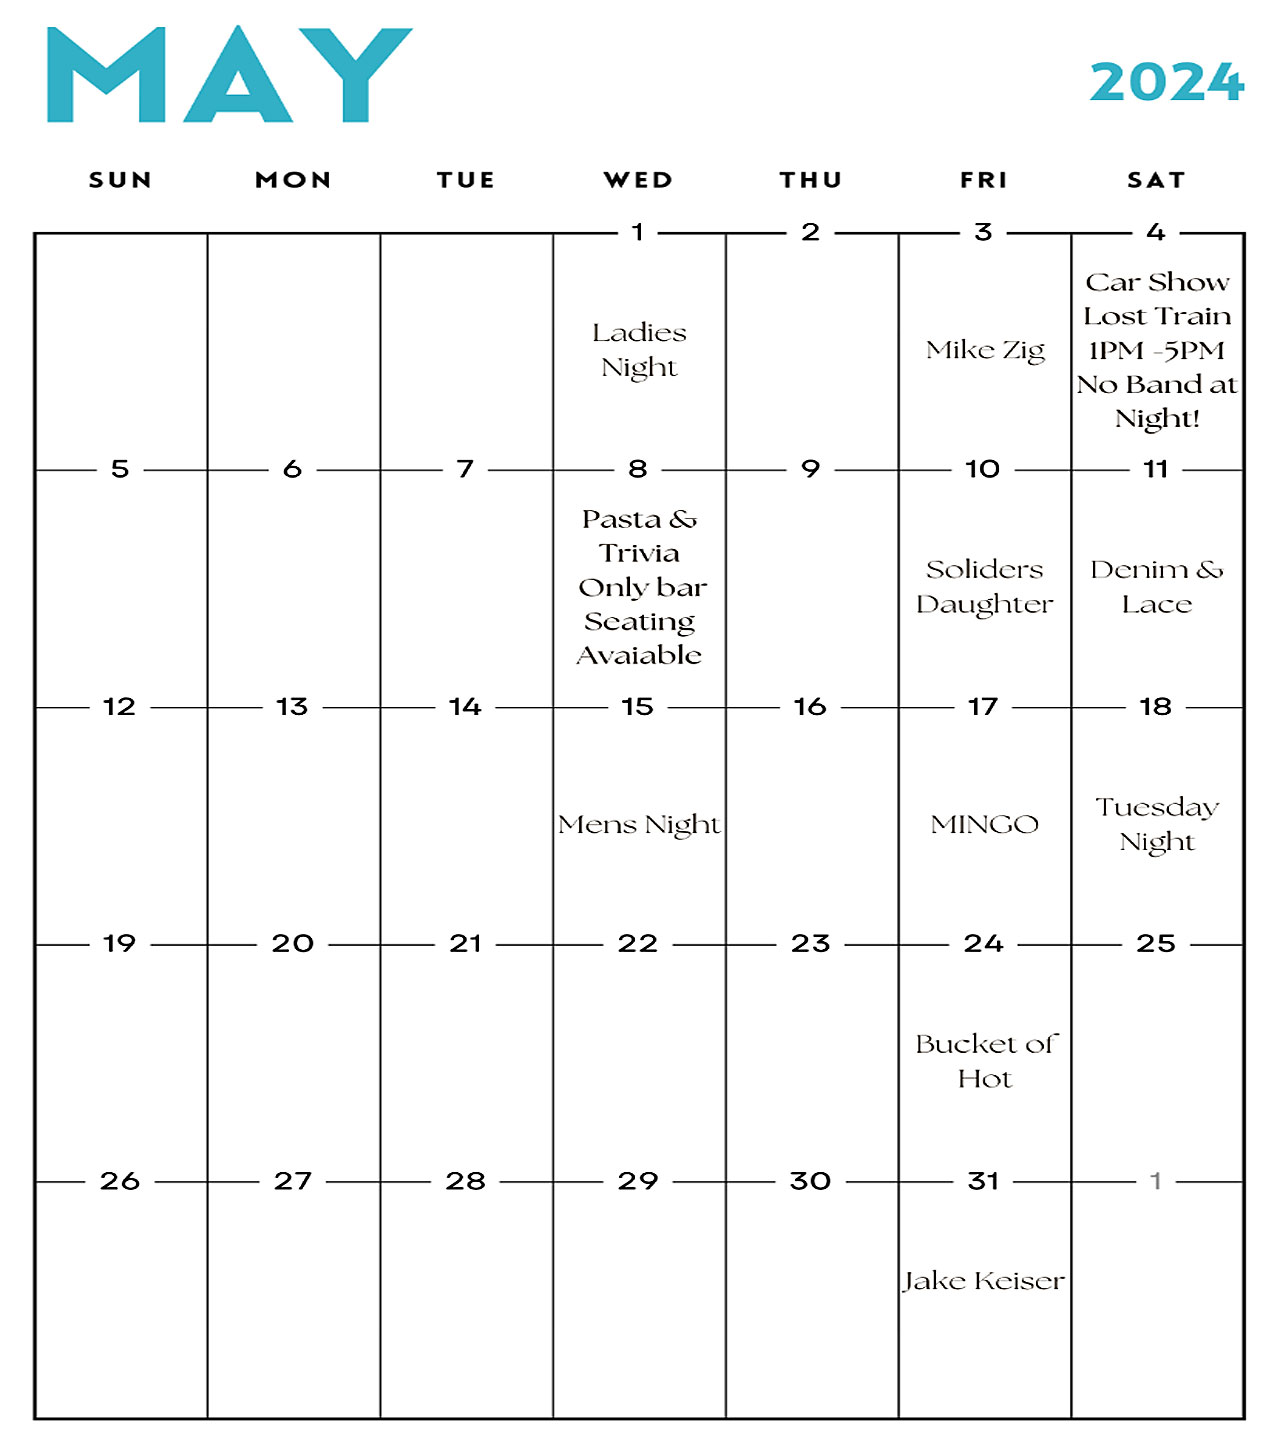 IACL calendar May, 2024